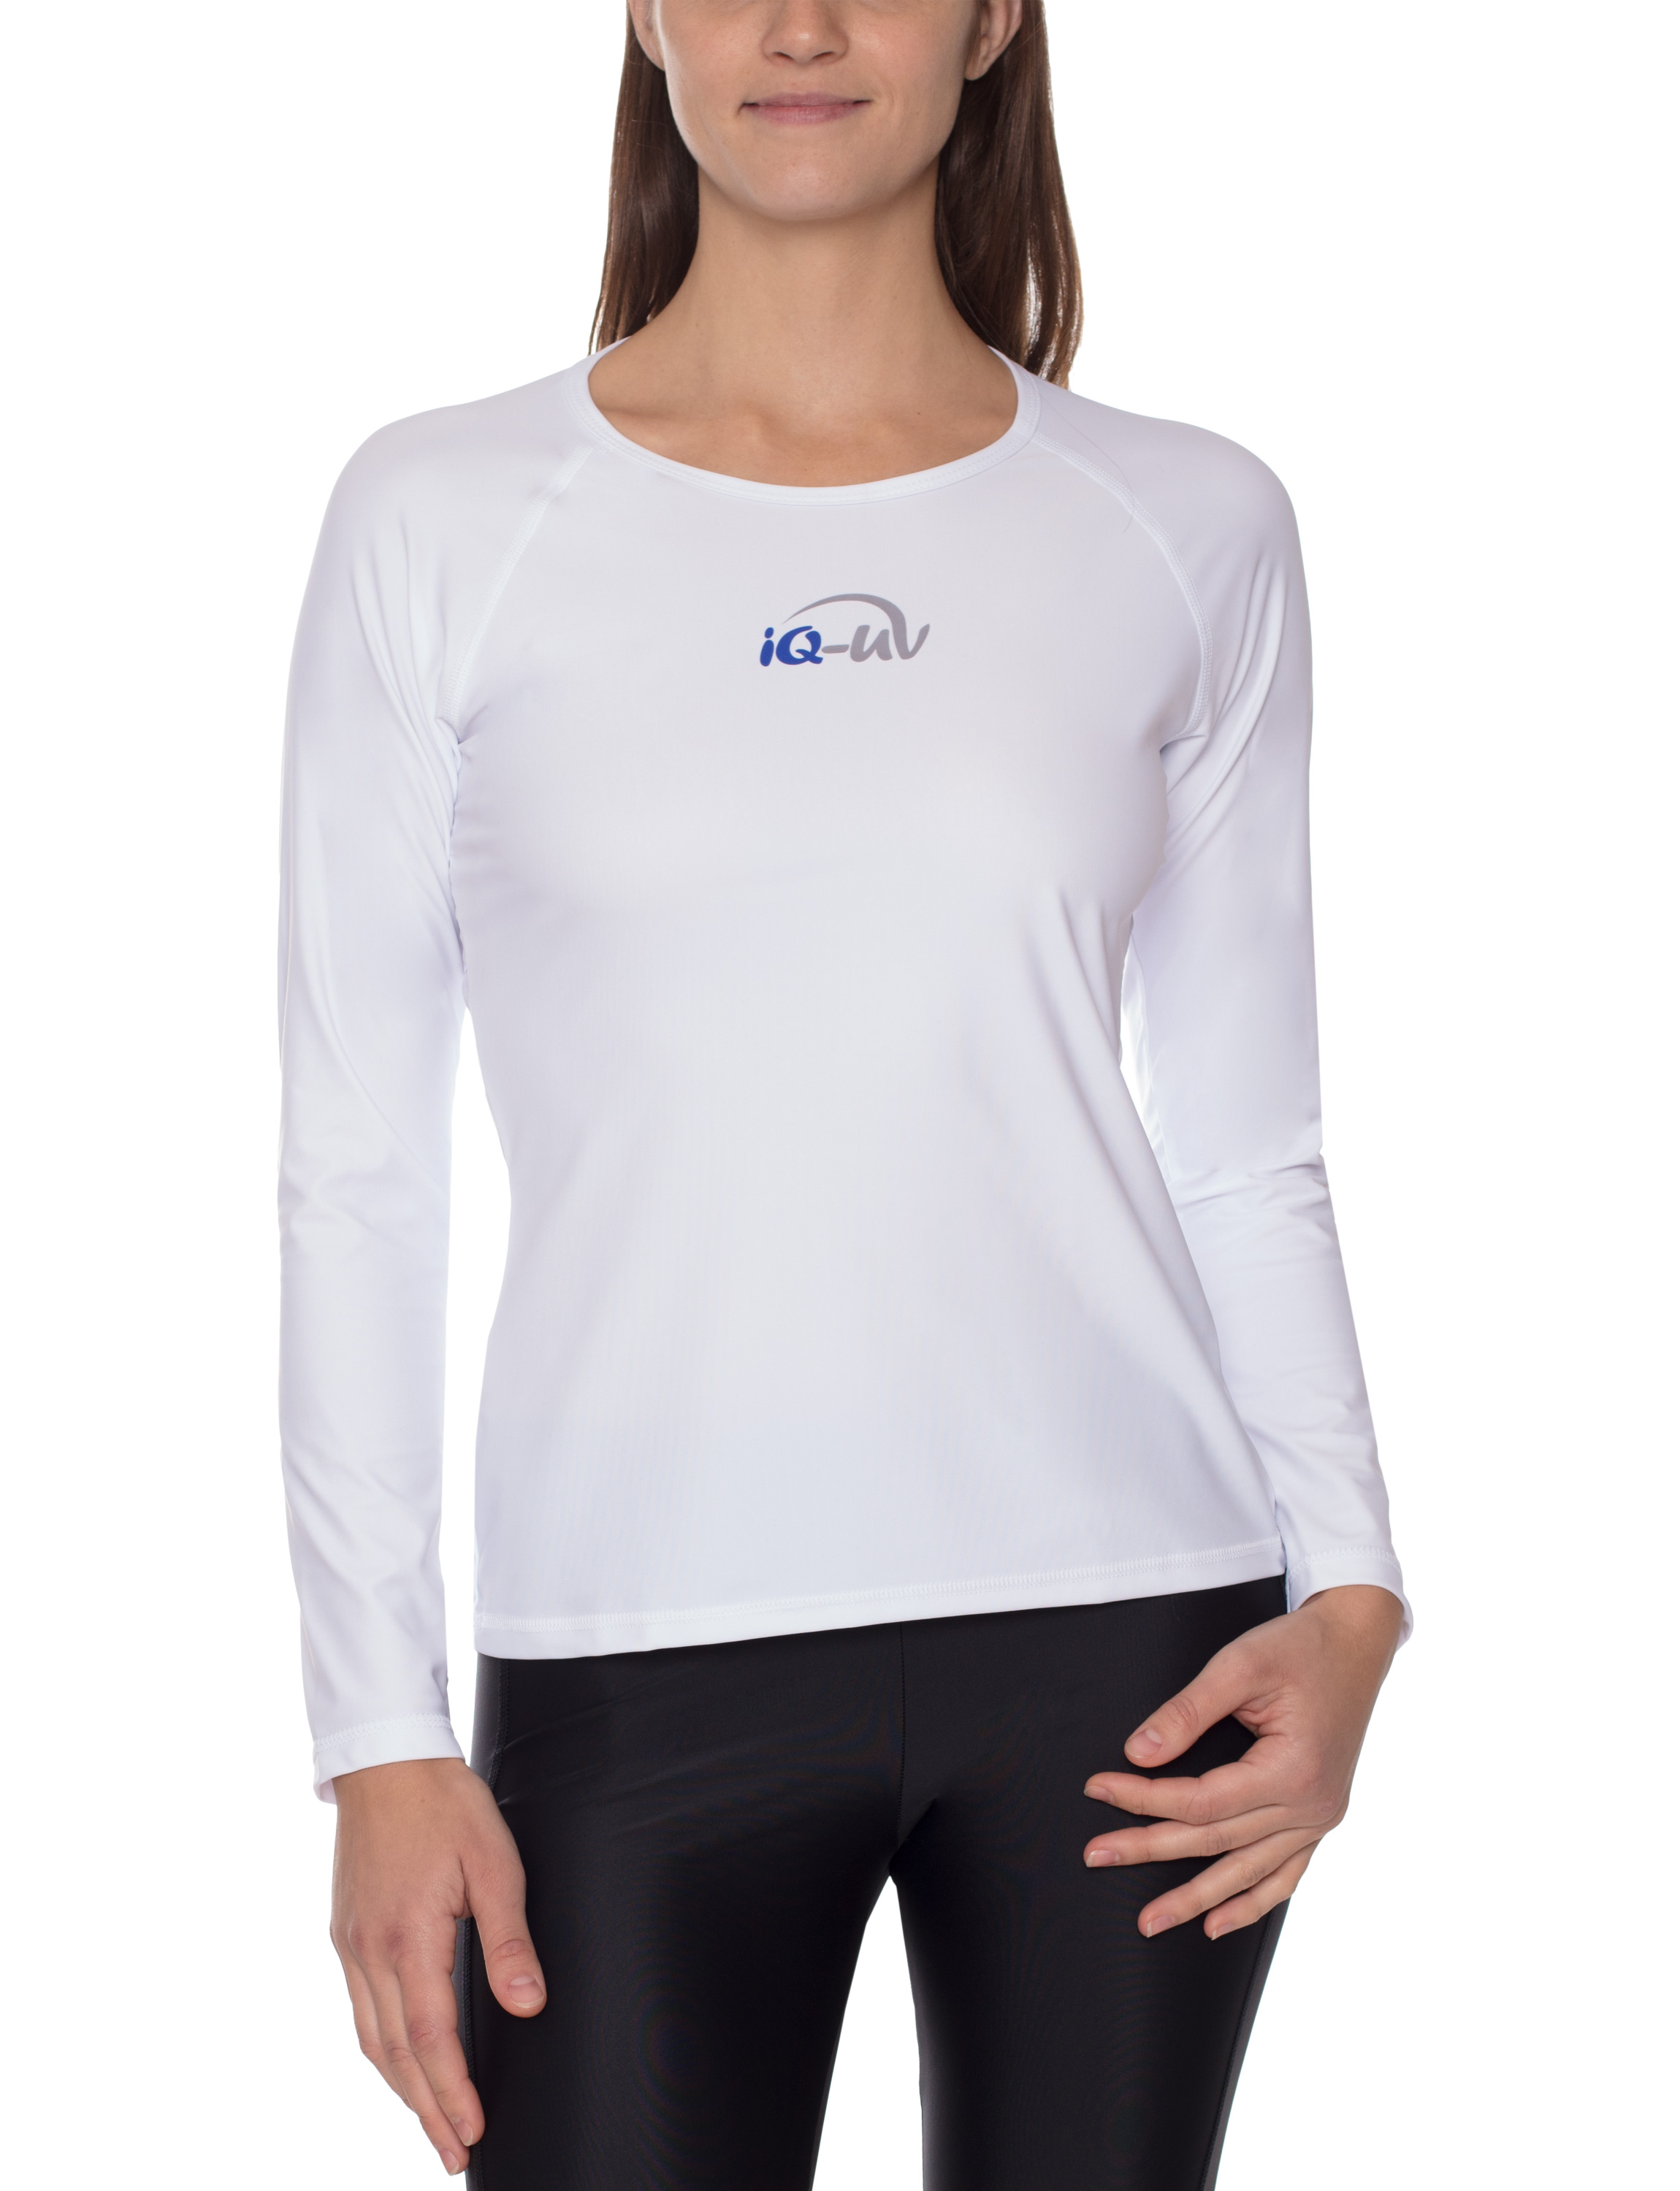 UV 300 Langarm Shirt regular fit Econyl aus recyceltem Material weiß